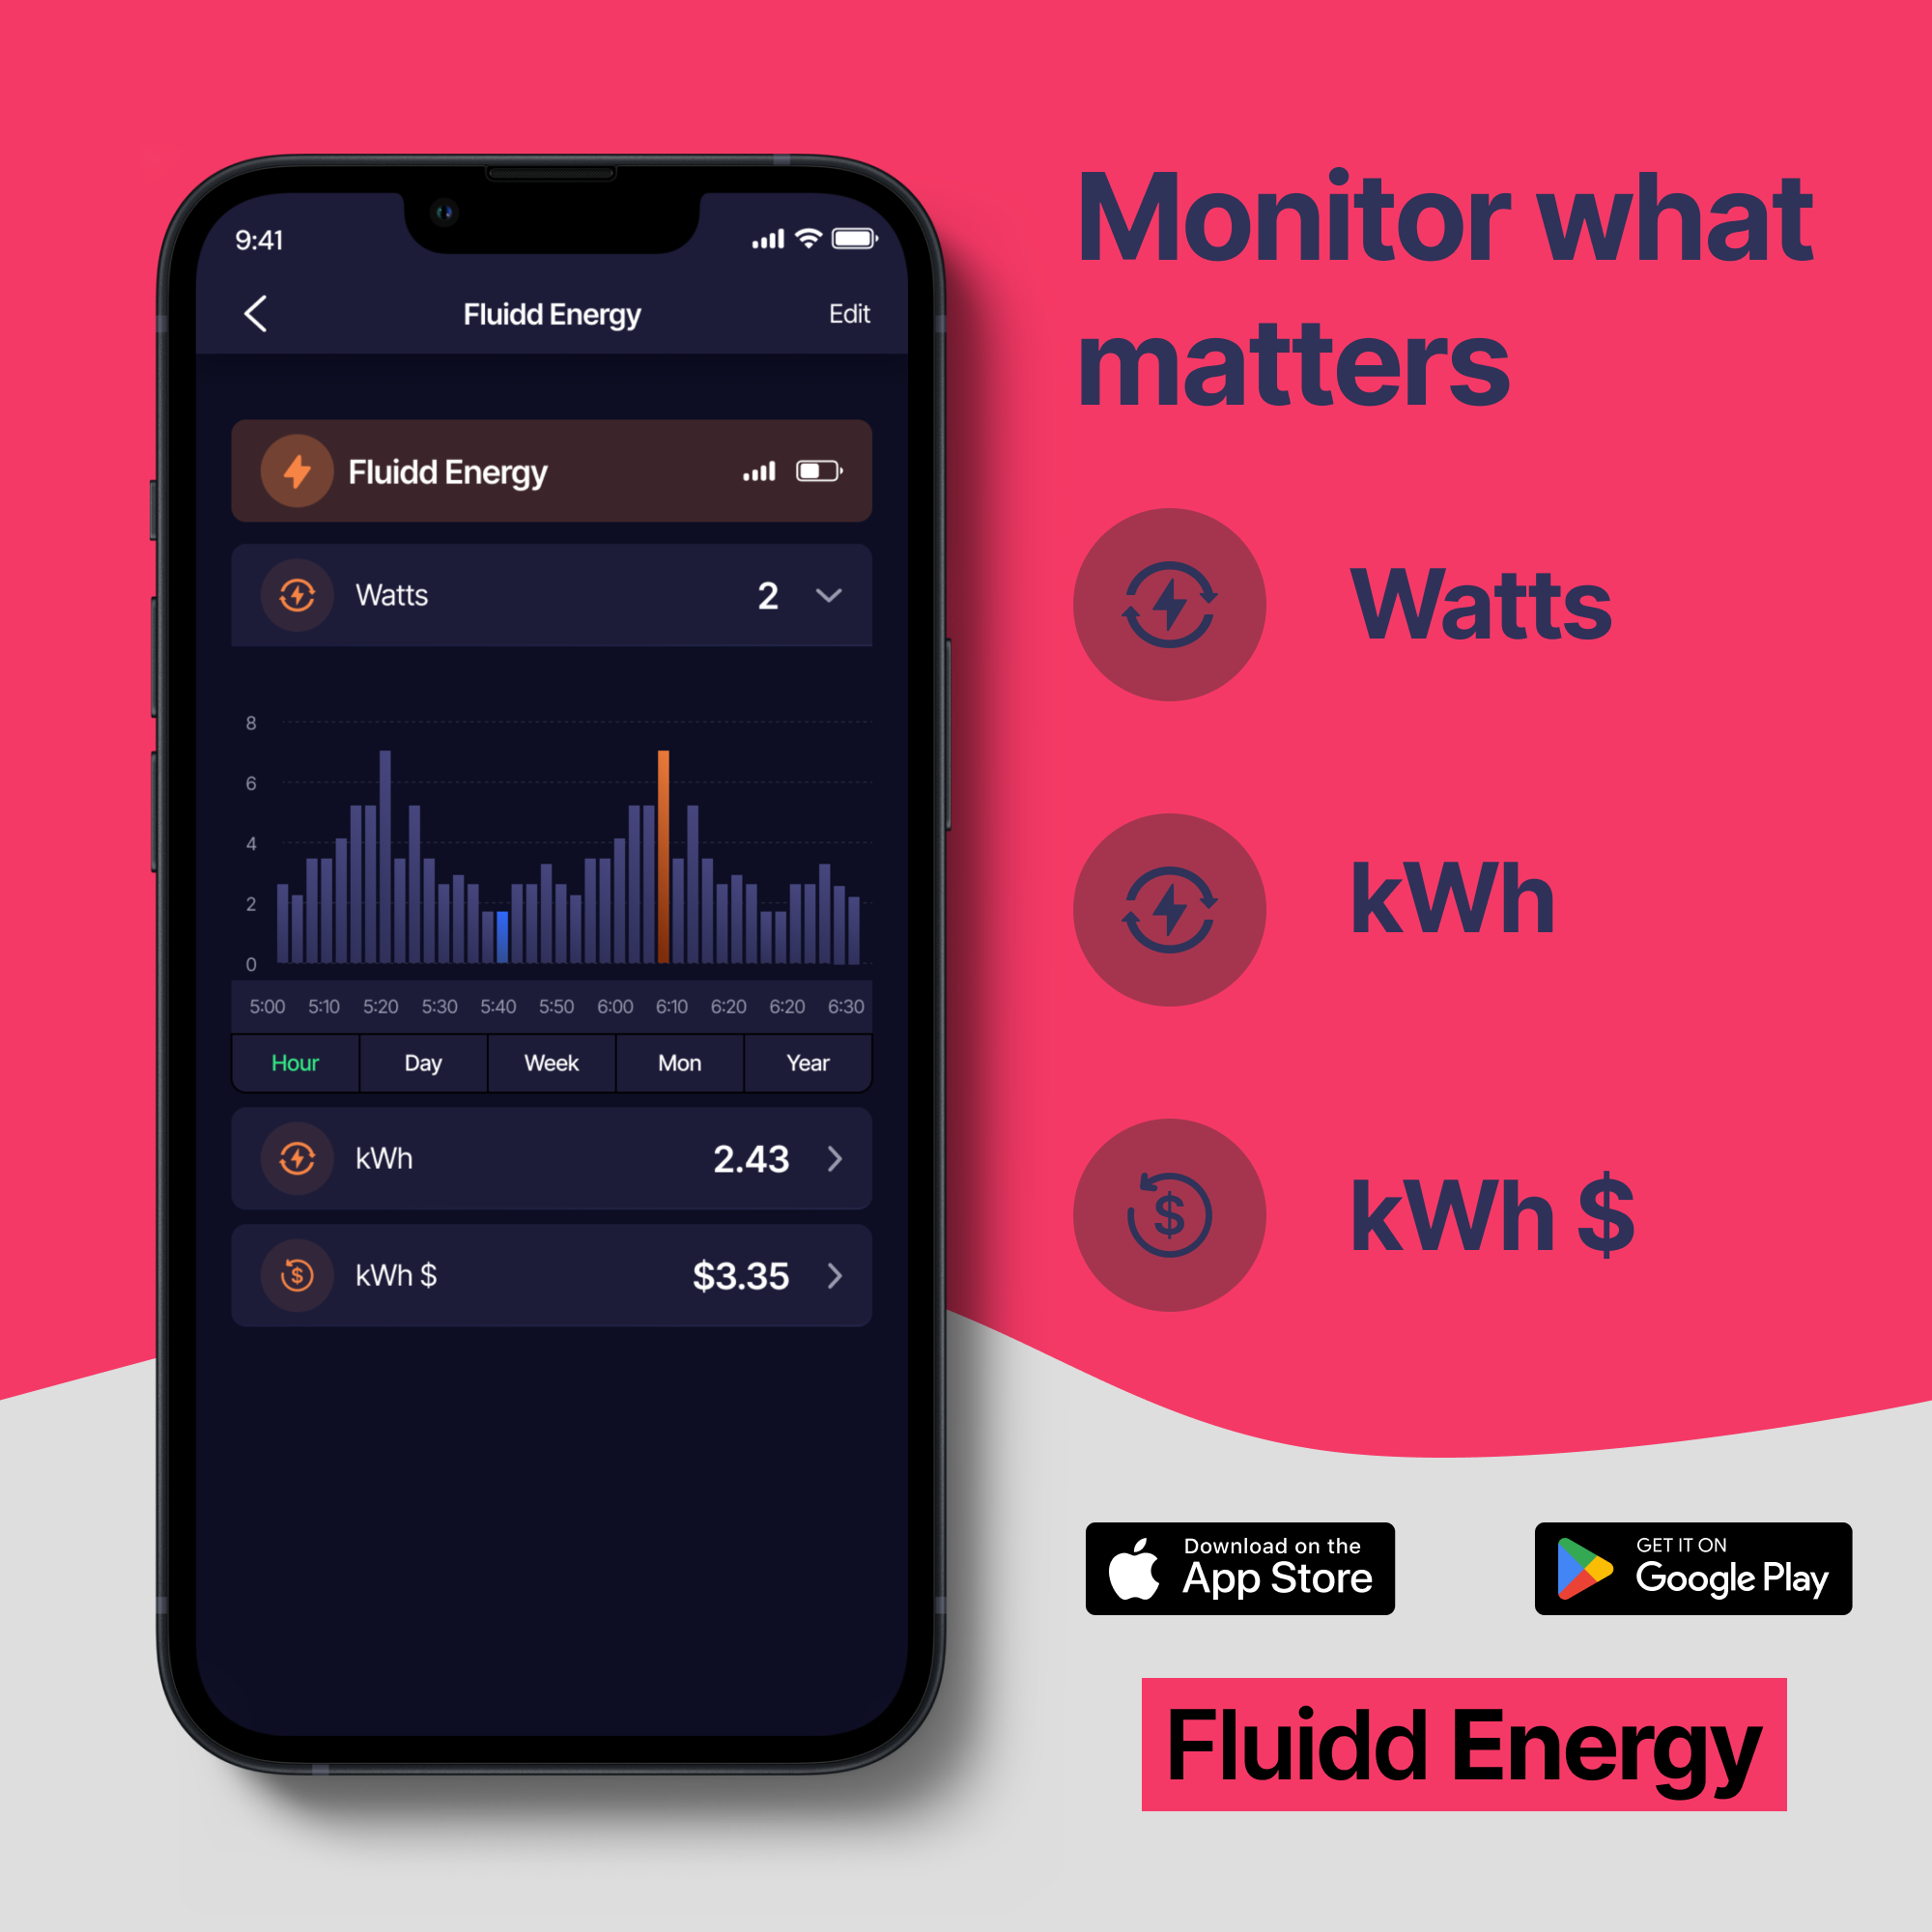 FluiddEnergy-MonitorWhatMattersv1.0_b7b56712-059f-43c8-953d-0c64f08a4380